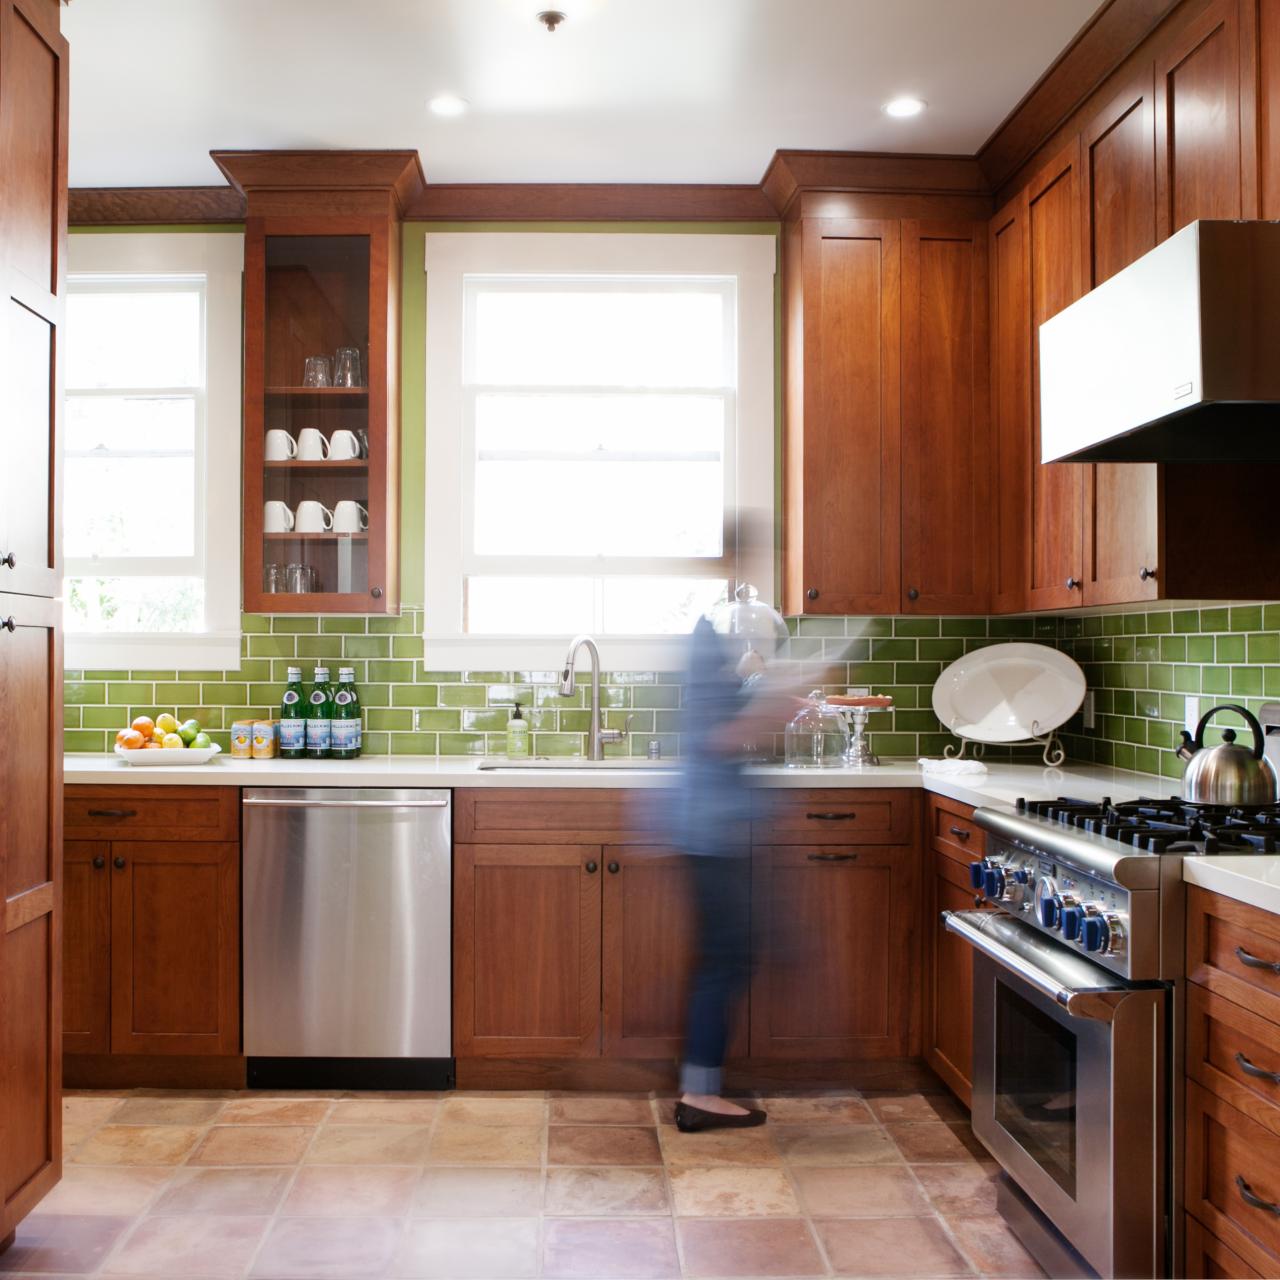 https://hgtvhome.sndimg.com/content/dam/images/hgtv/fullset/2014/10/1/0/DP_Kari-McIntosh-Dawdy-brown-Arts-and-Crafts-kitchen-green-tile_h.jpg.rend.hgtvcom.1280.1280.suffix/1412194152570.jpeg